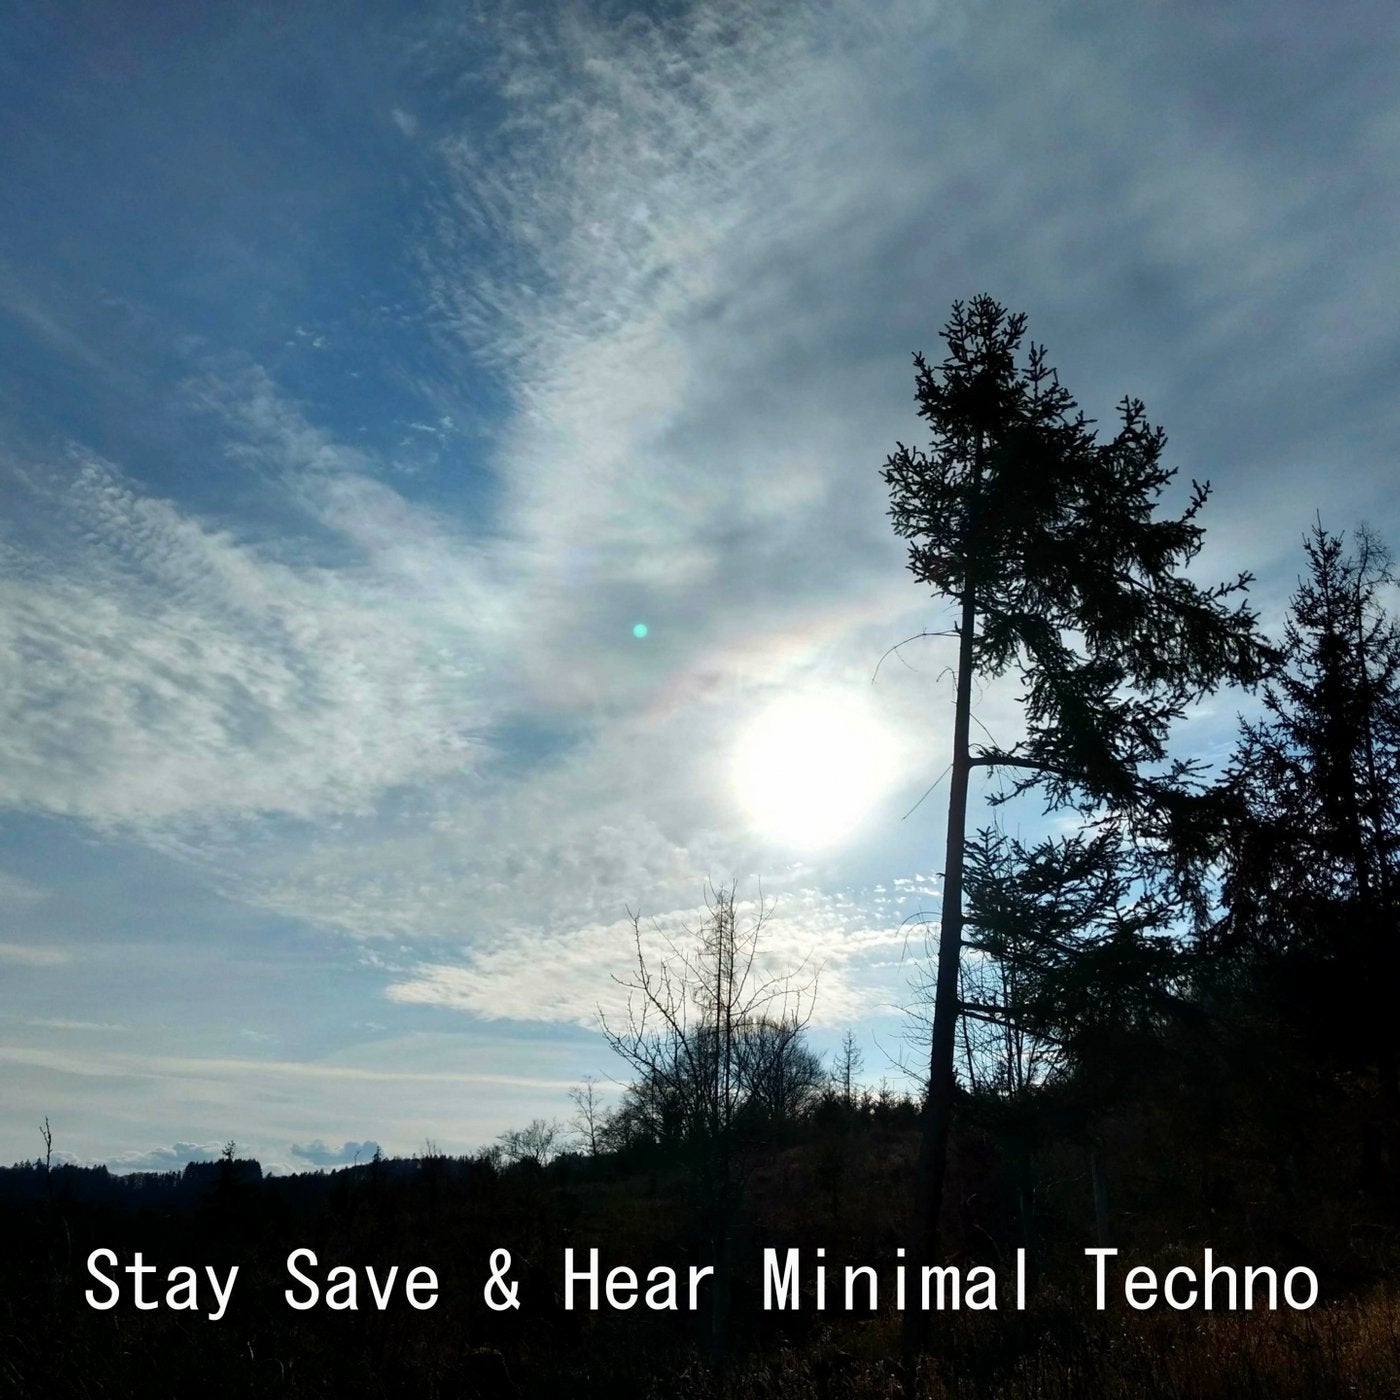 Stay Save & Hear Minimal Techno